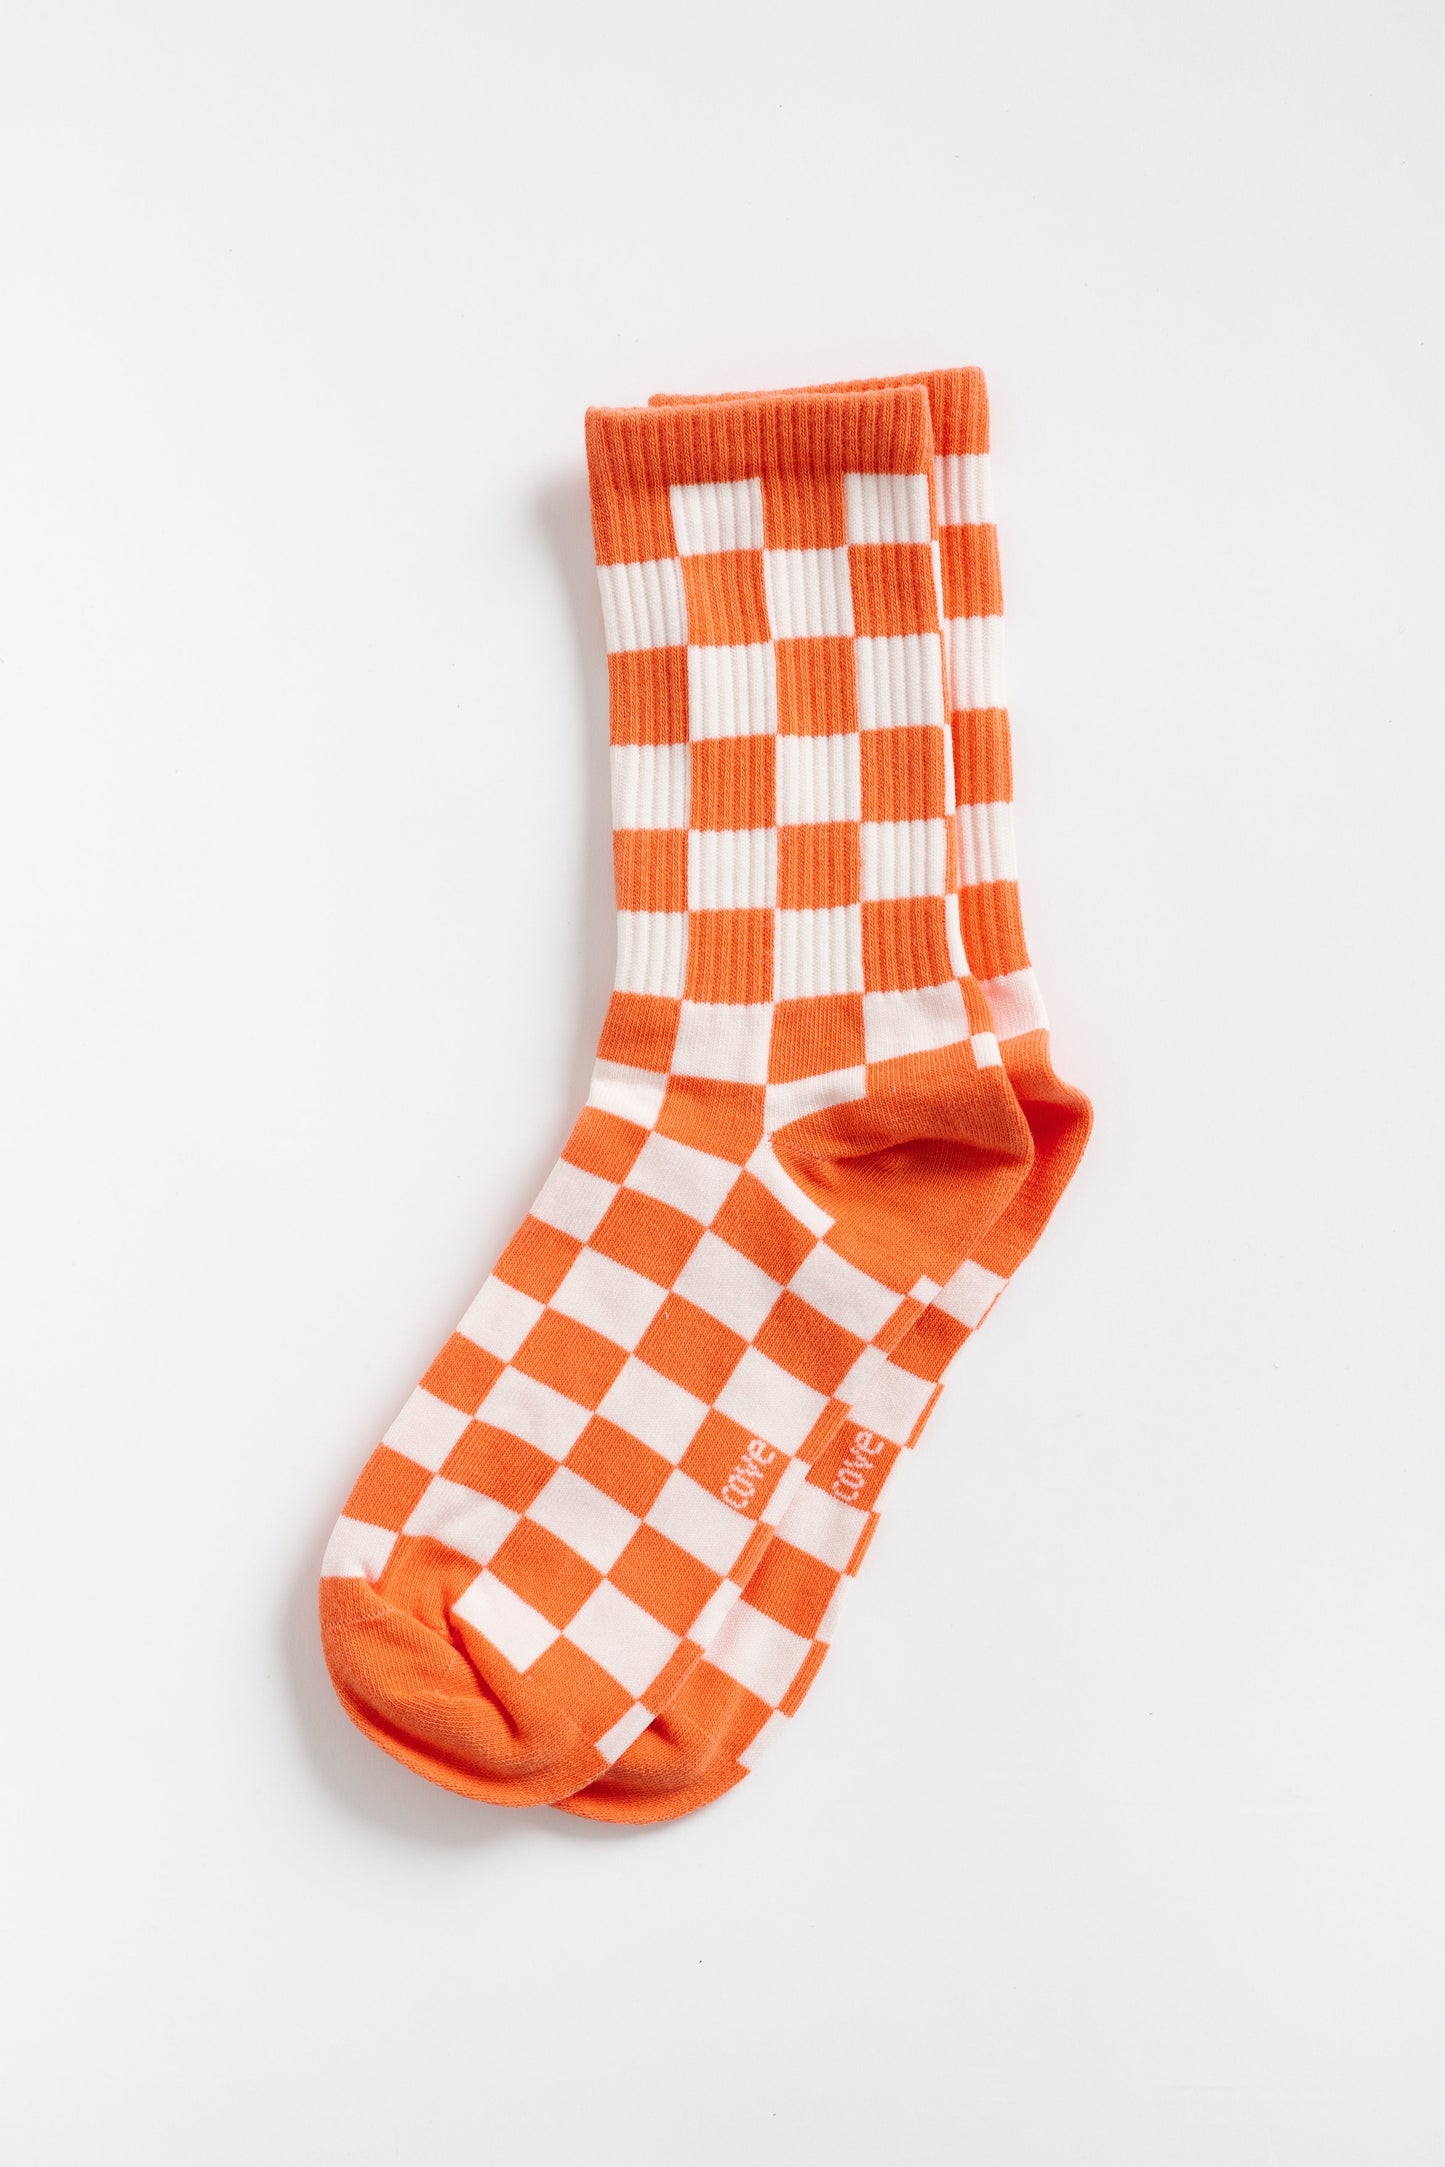 Cove Checker Retro Socks WOMEN'S SOCKS Cove Accessories Orange/White OS 